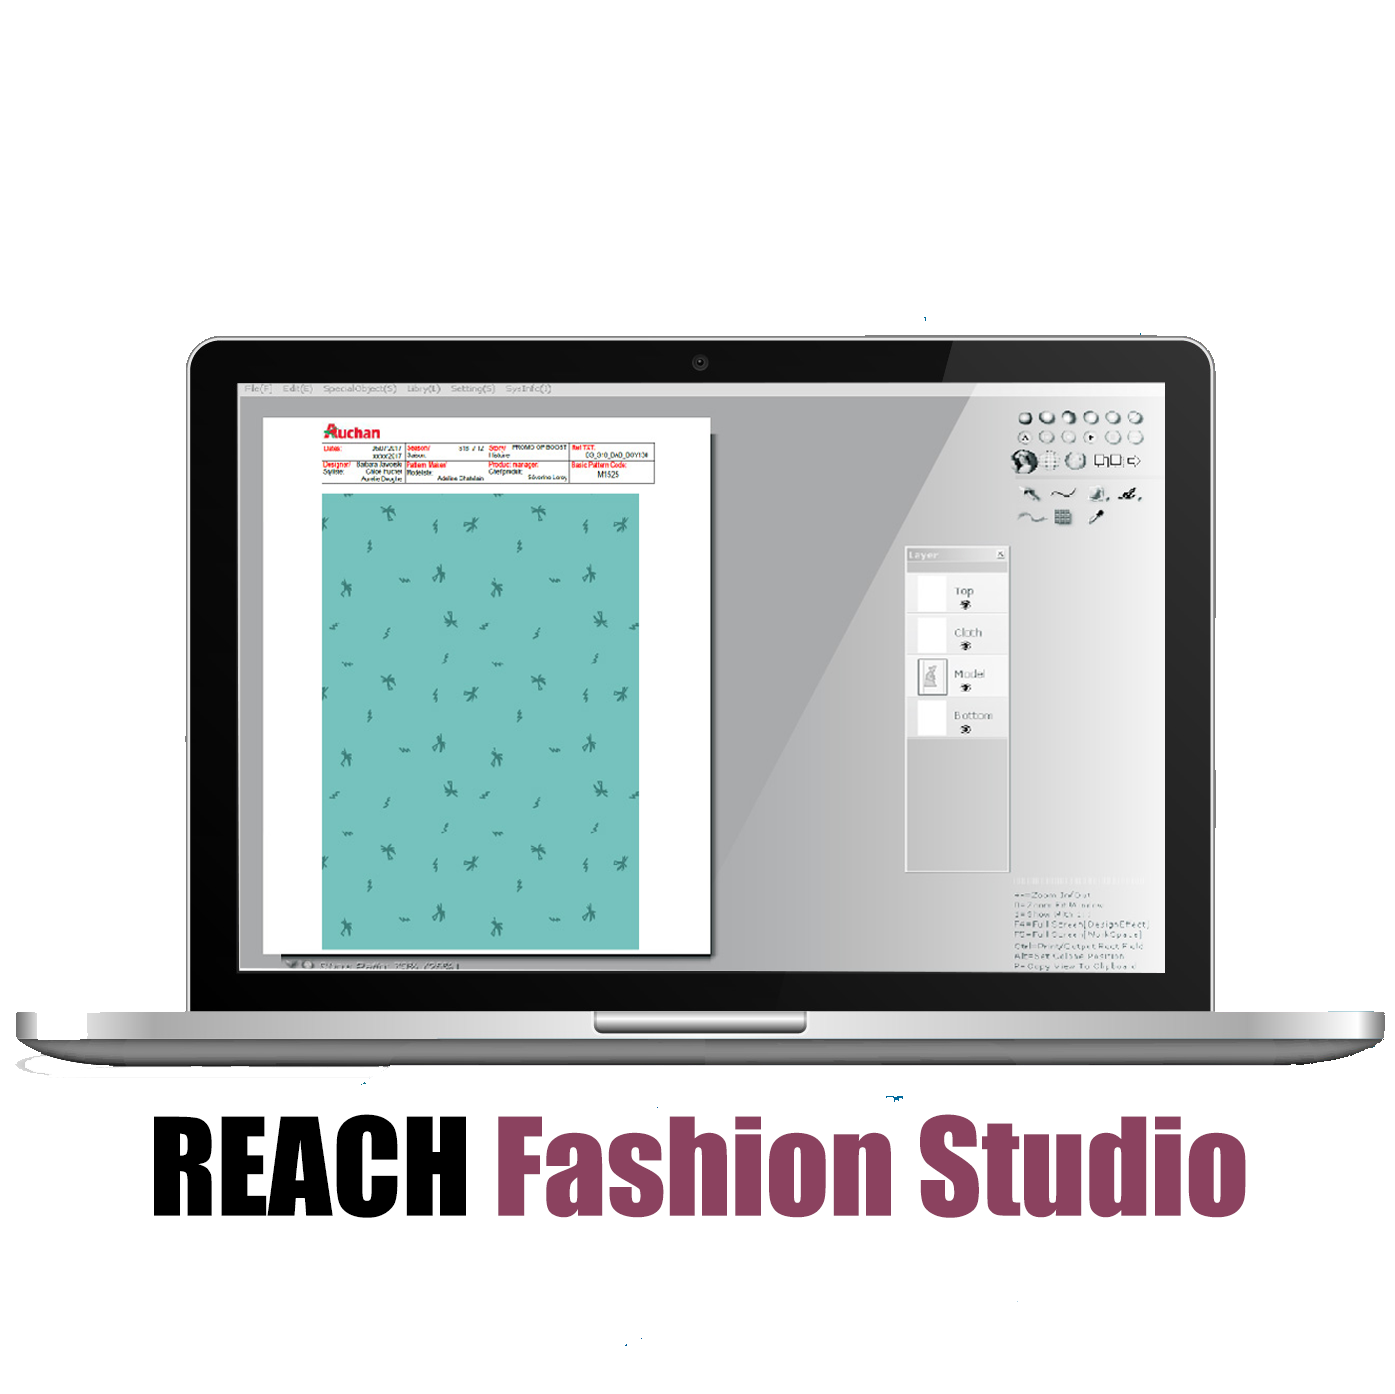 apparel-software-reach-fashion-studio-1